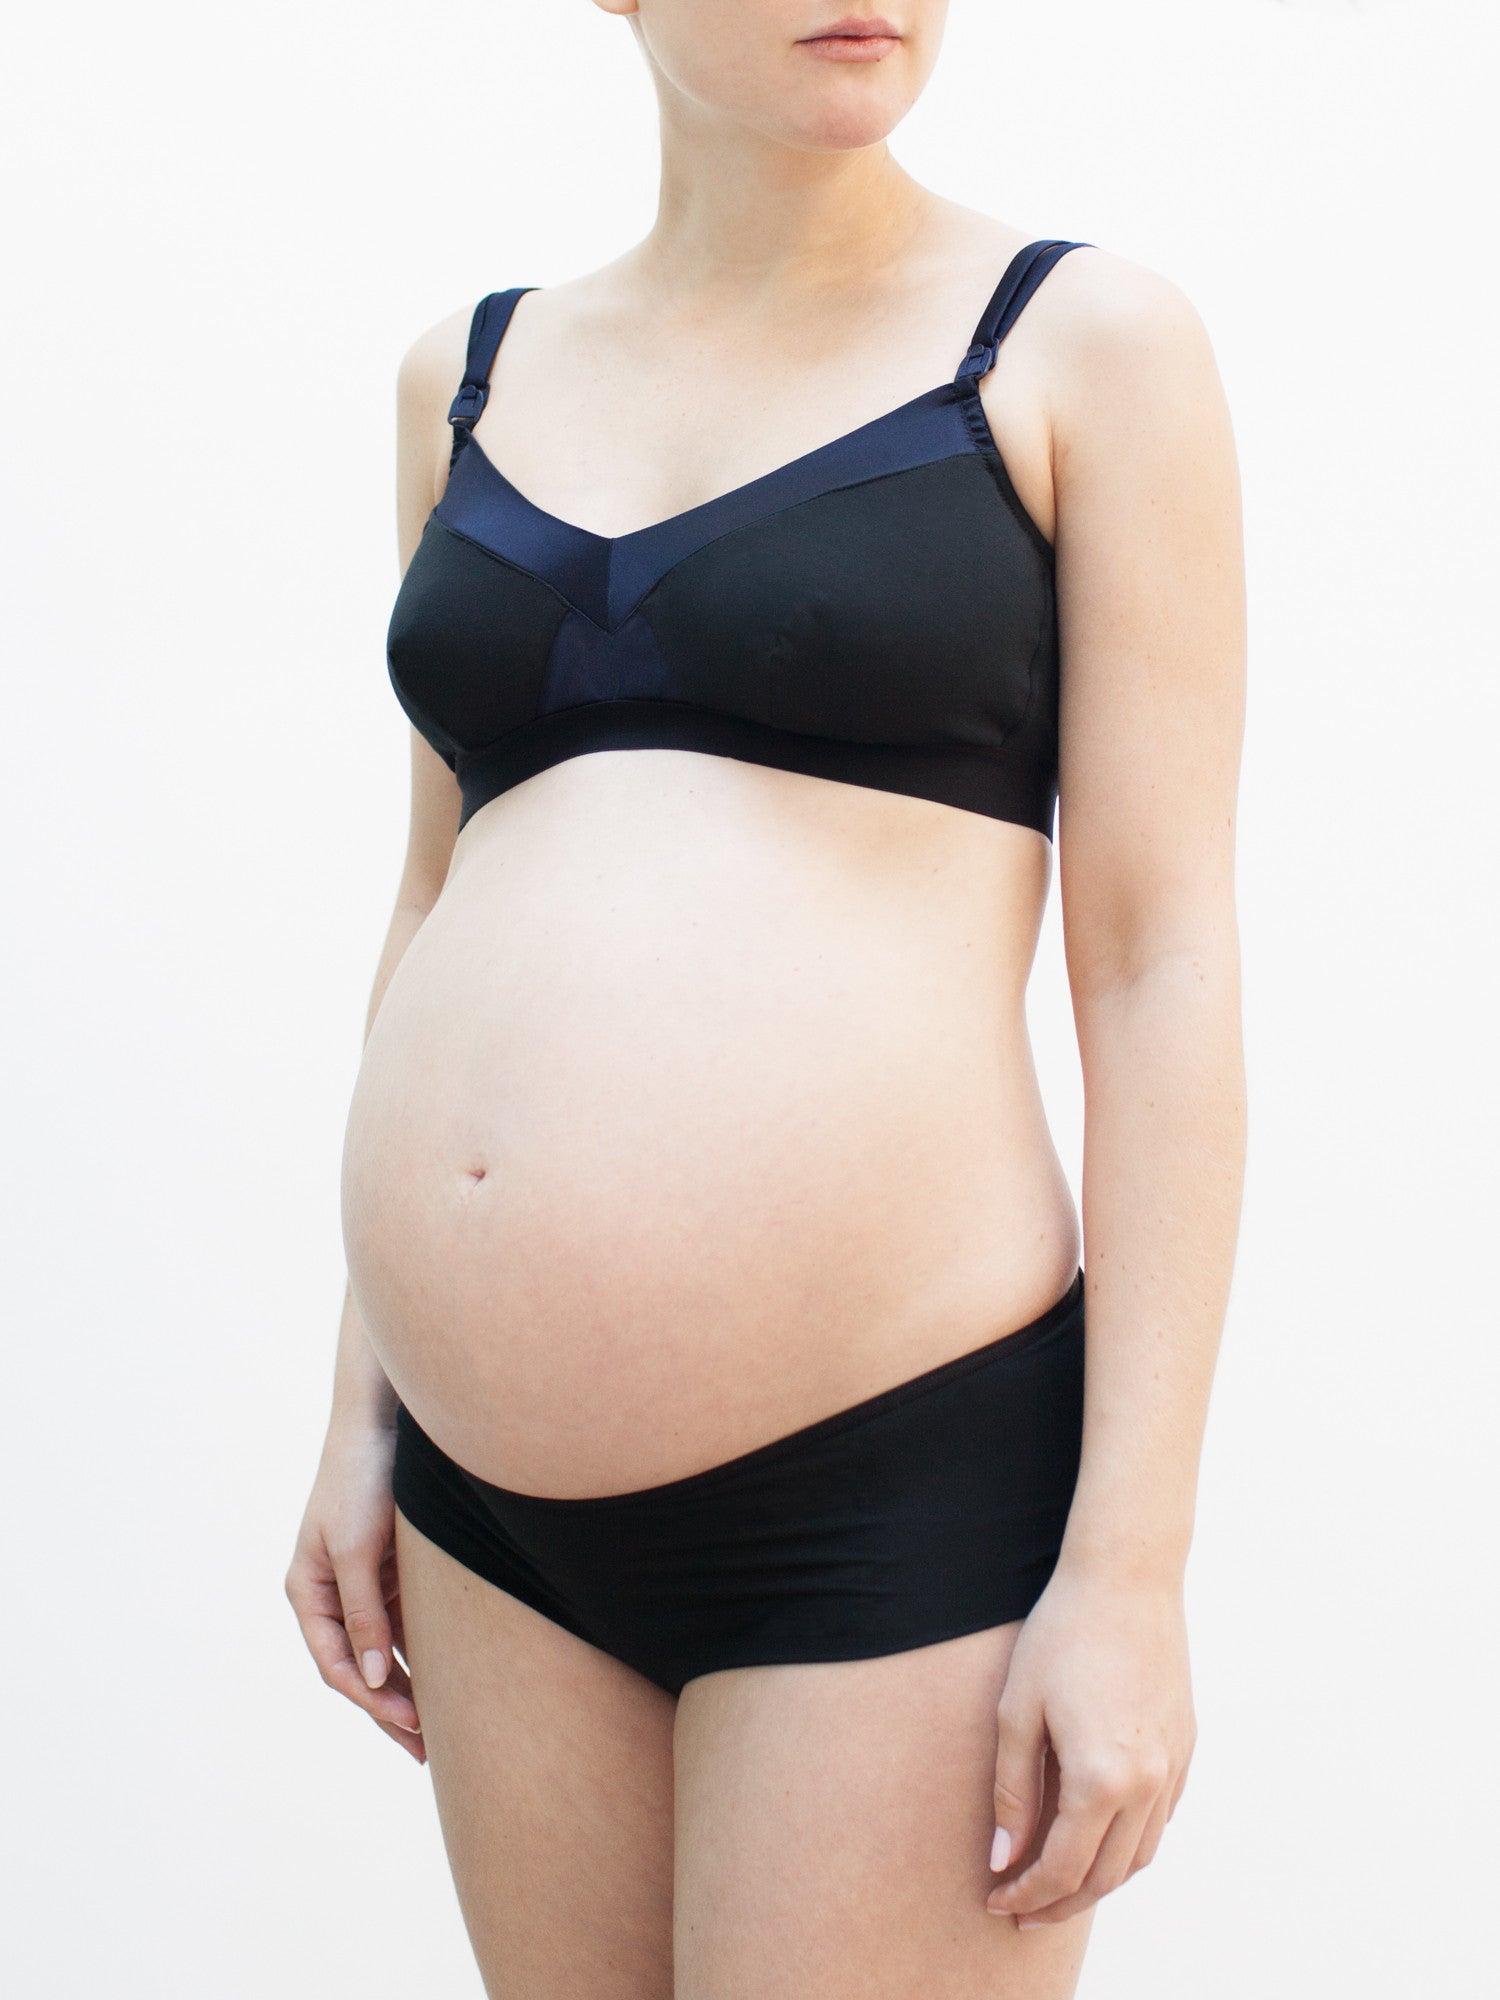 six.emmeline.luxury.nursing.bra.black.silk maternity breastfeeding pregnancy